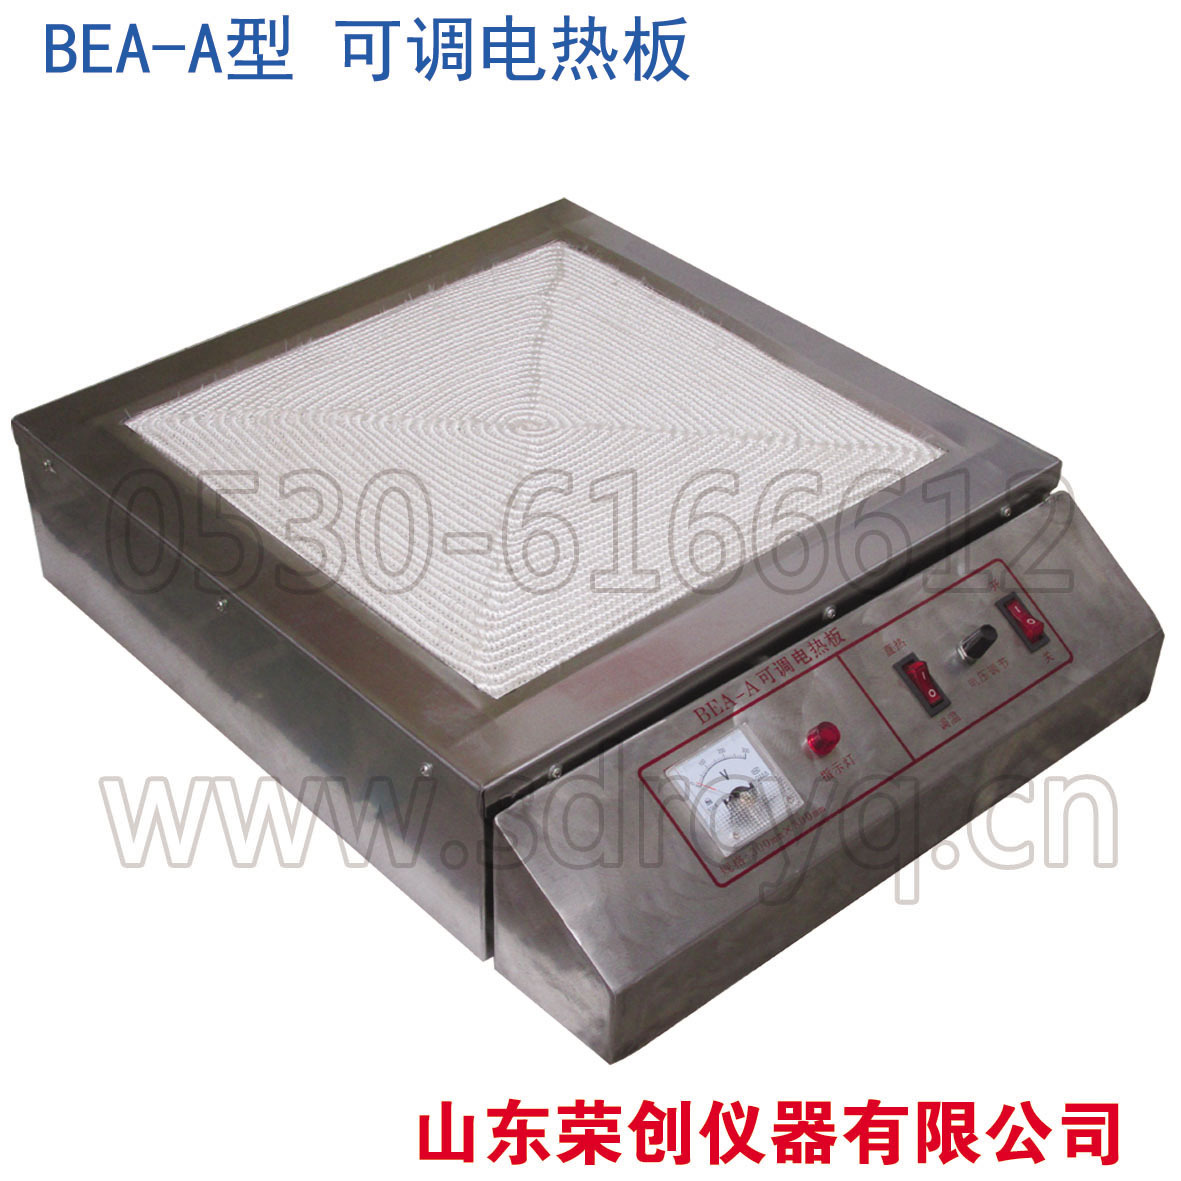 BEA-A型 可调电热板-2